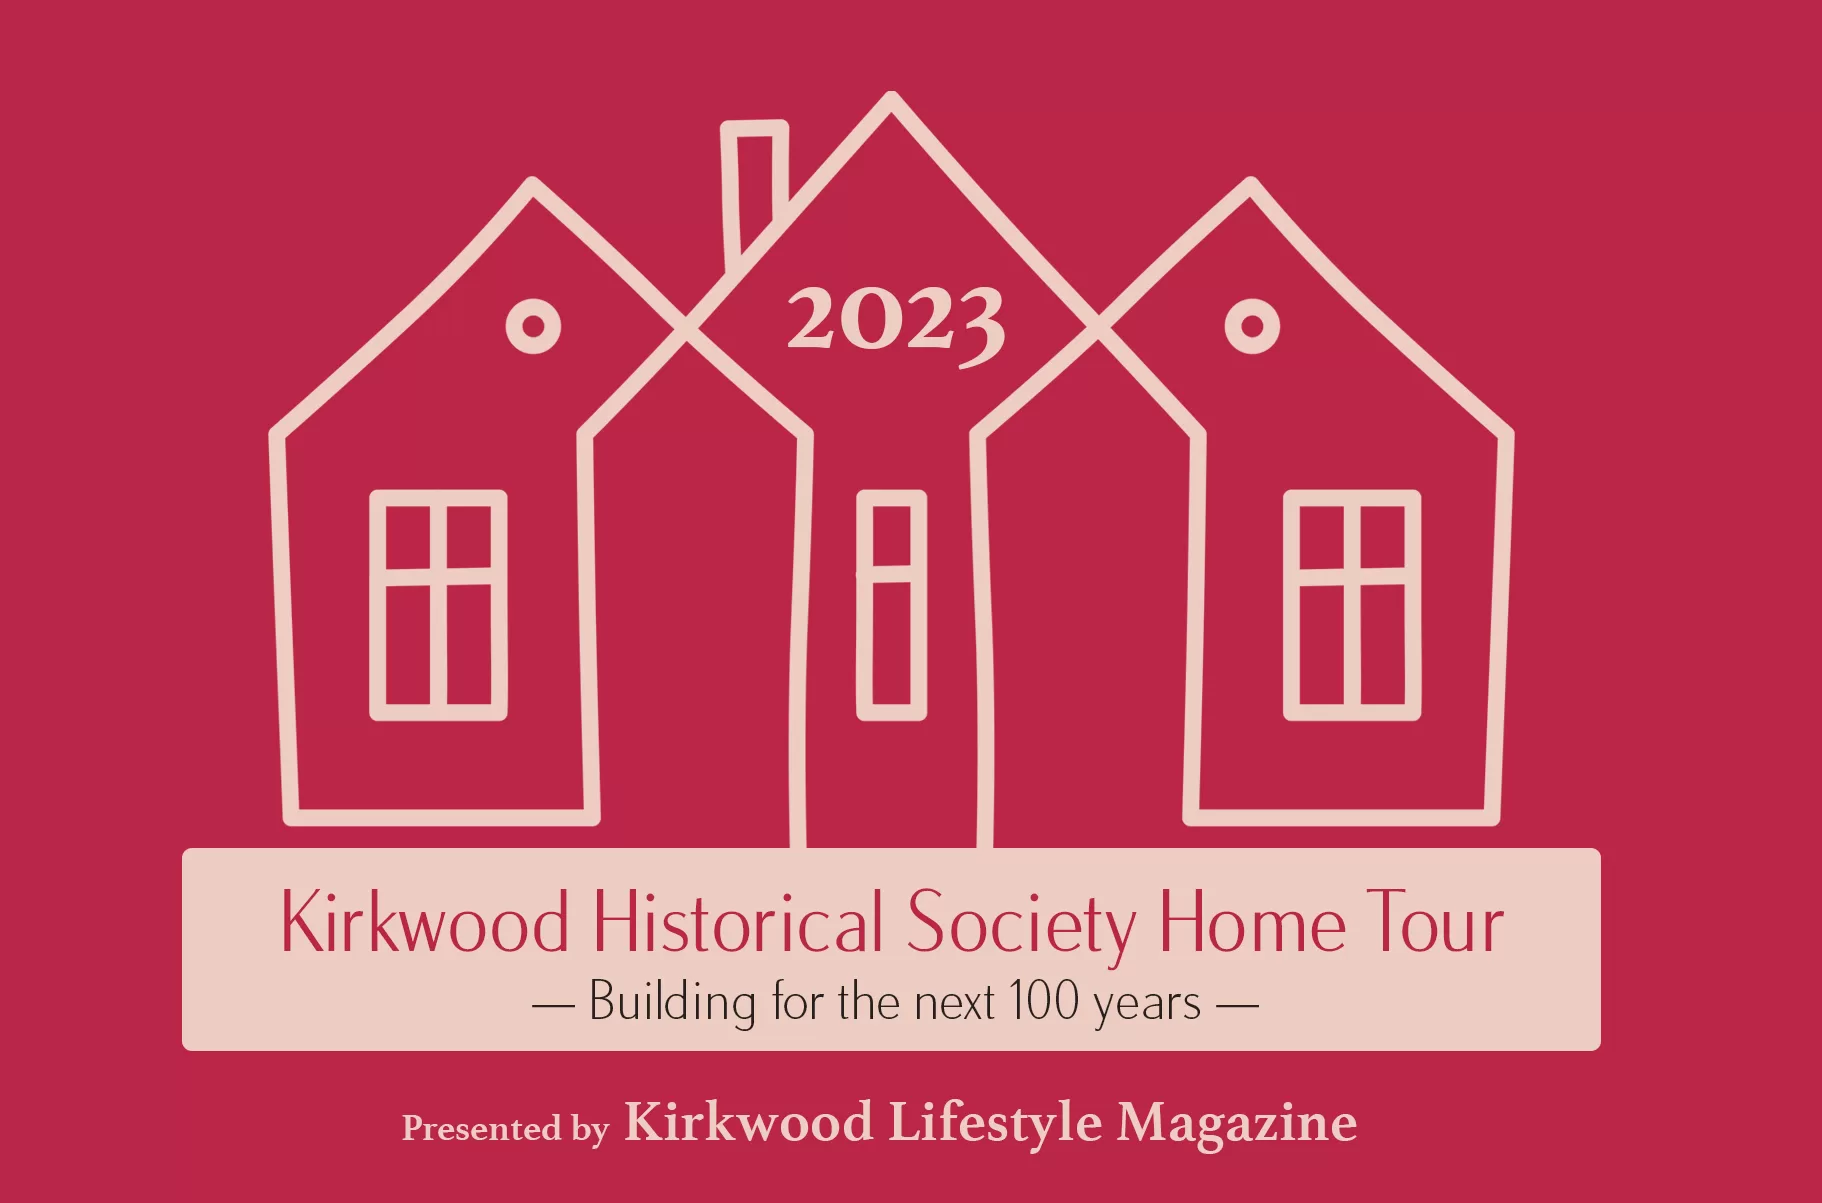 Kirkwood Historical Society Home Tour 2023